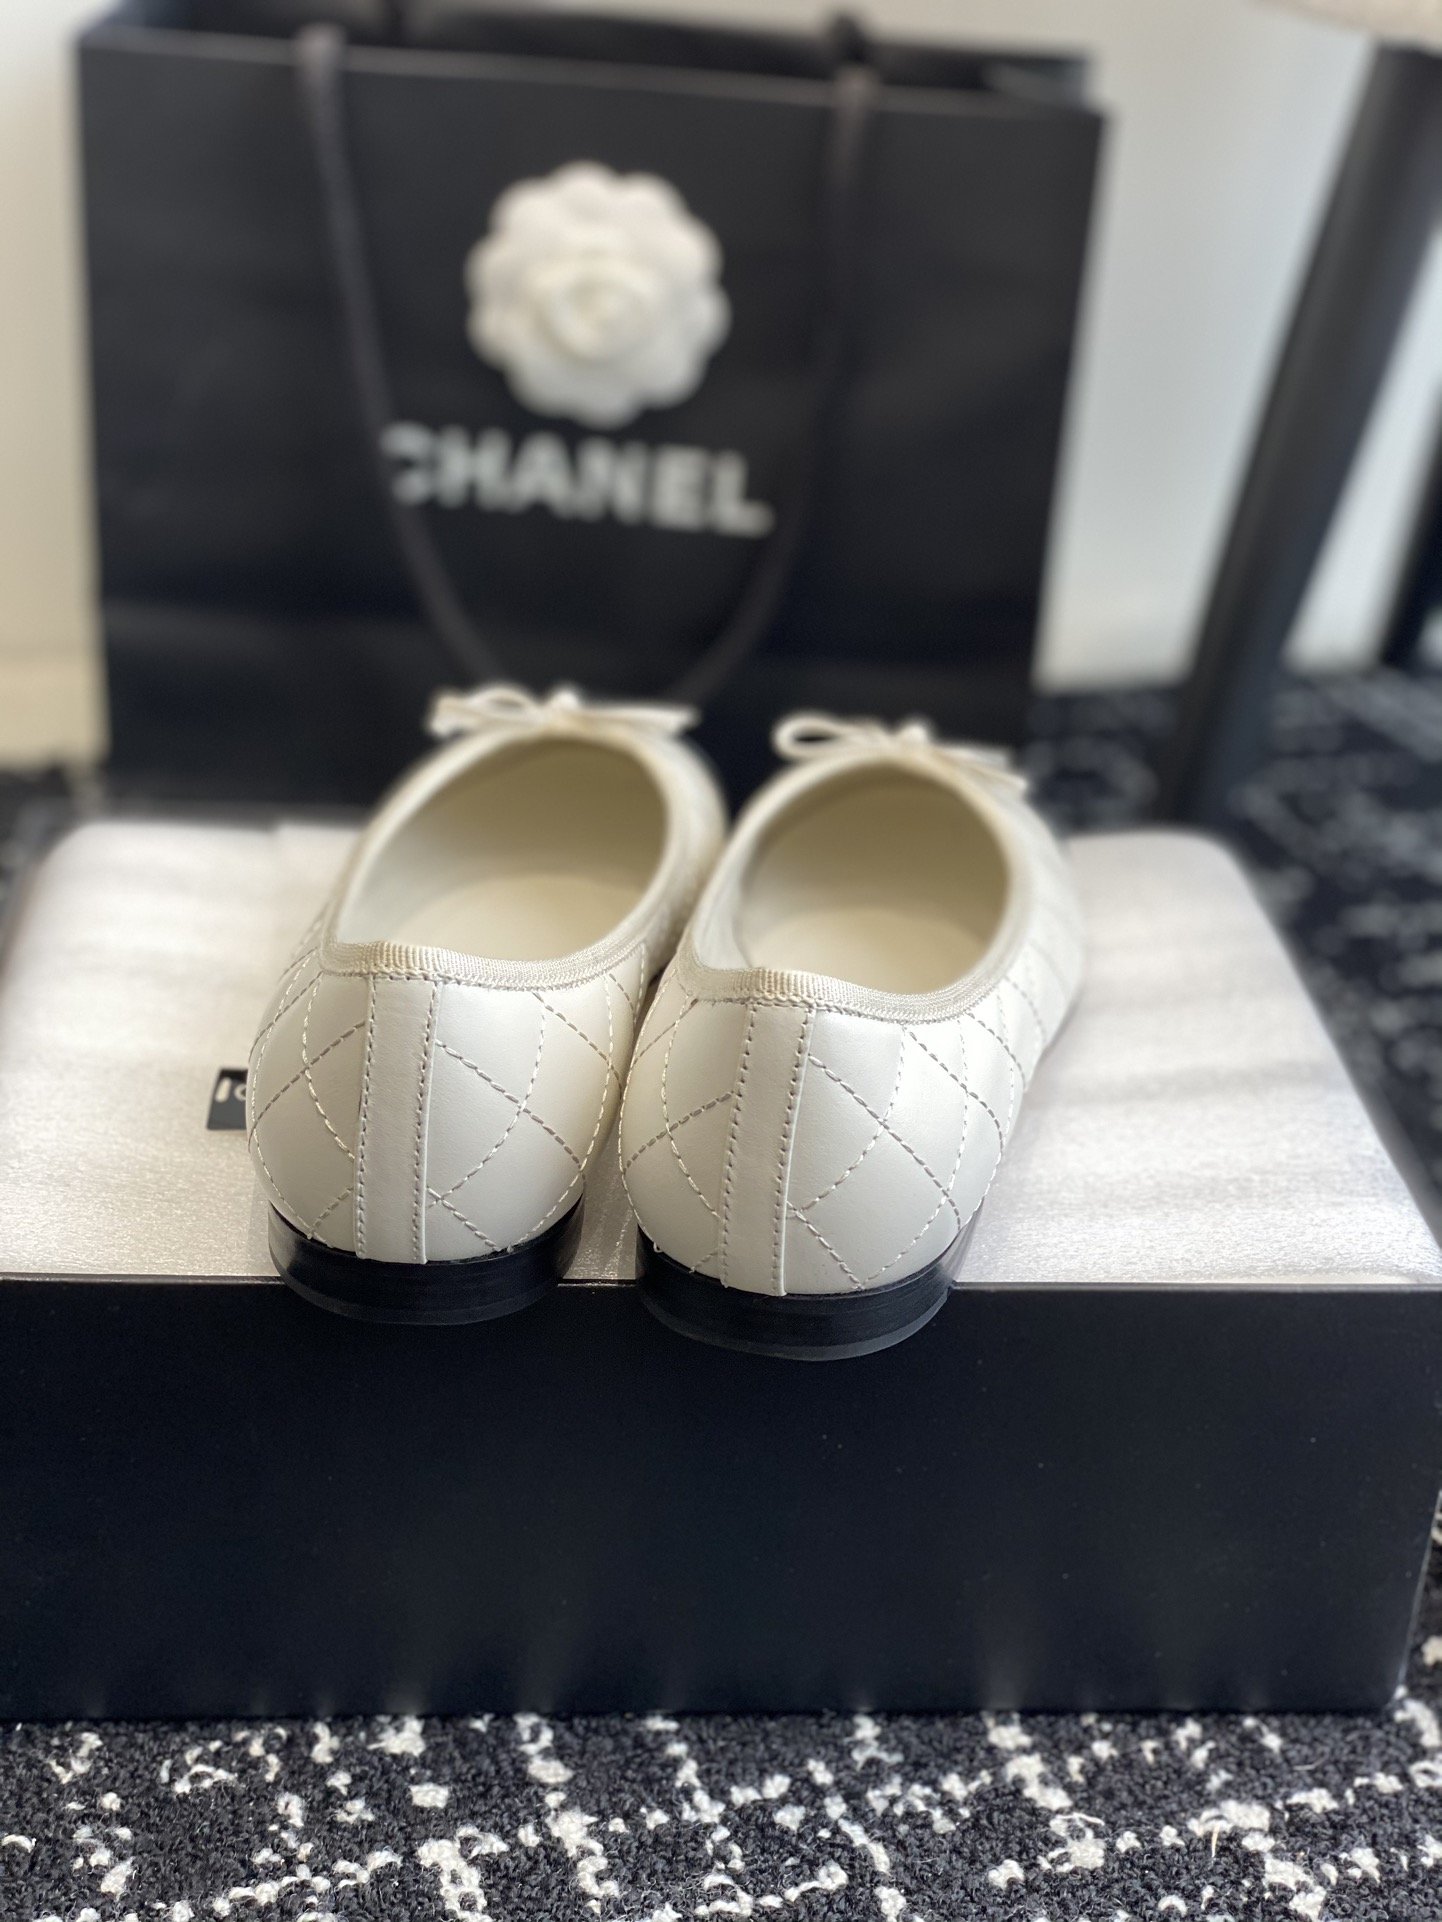 Chanel23芭蕾舞单鞋原版1:1切割而成Chanel香奈儿万年经典蝴蝶结圆头芭蕾舞鞋好品质不多真正做